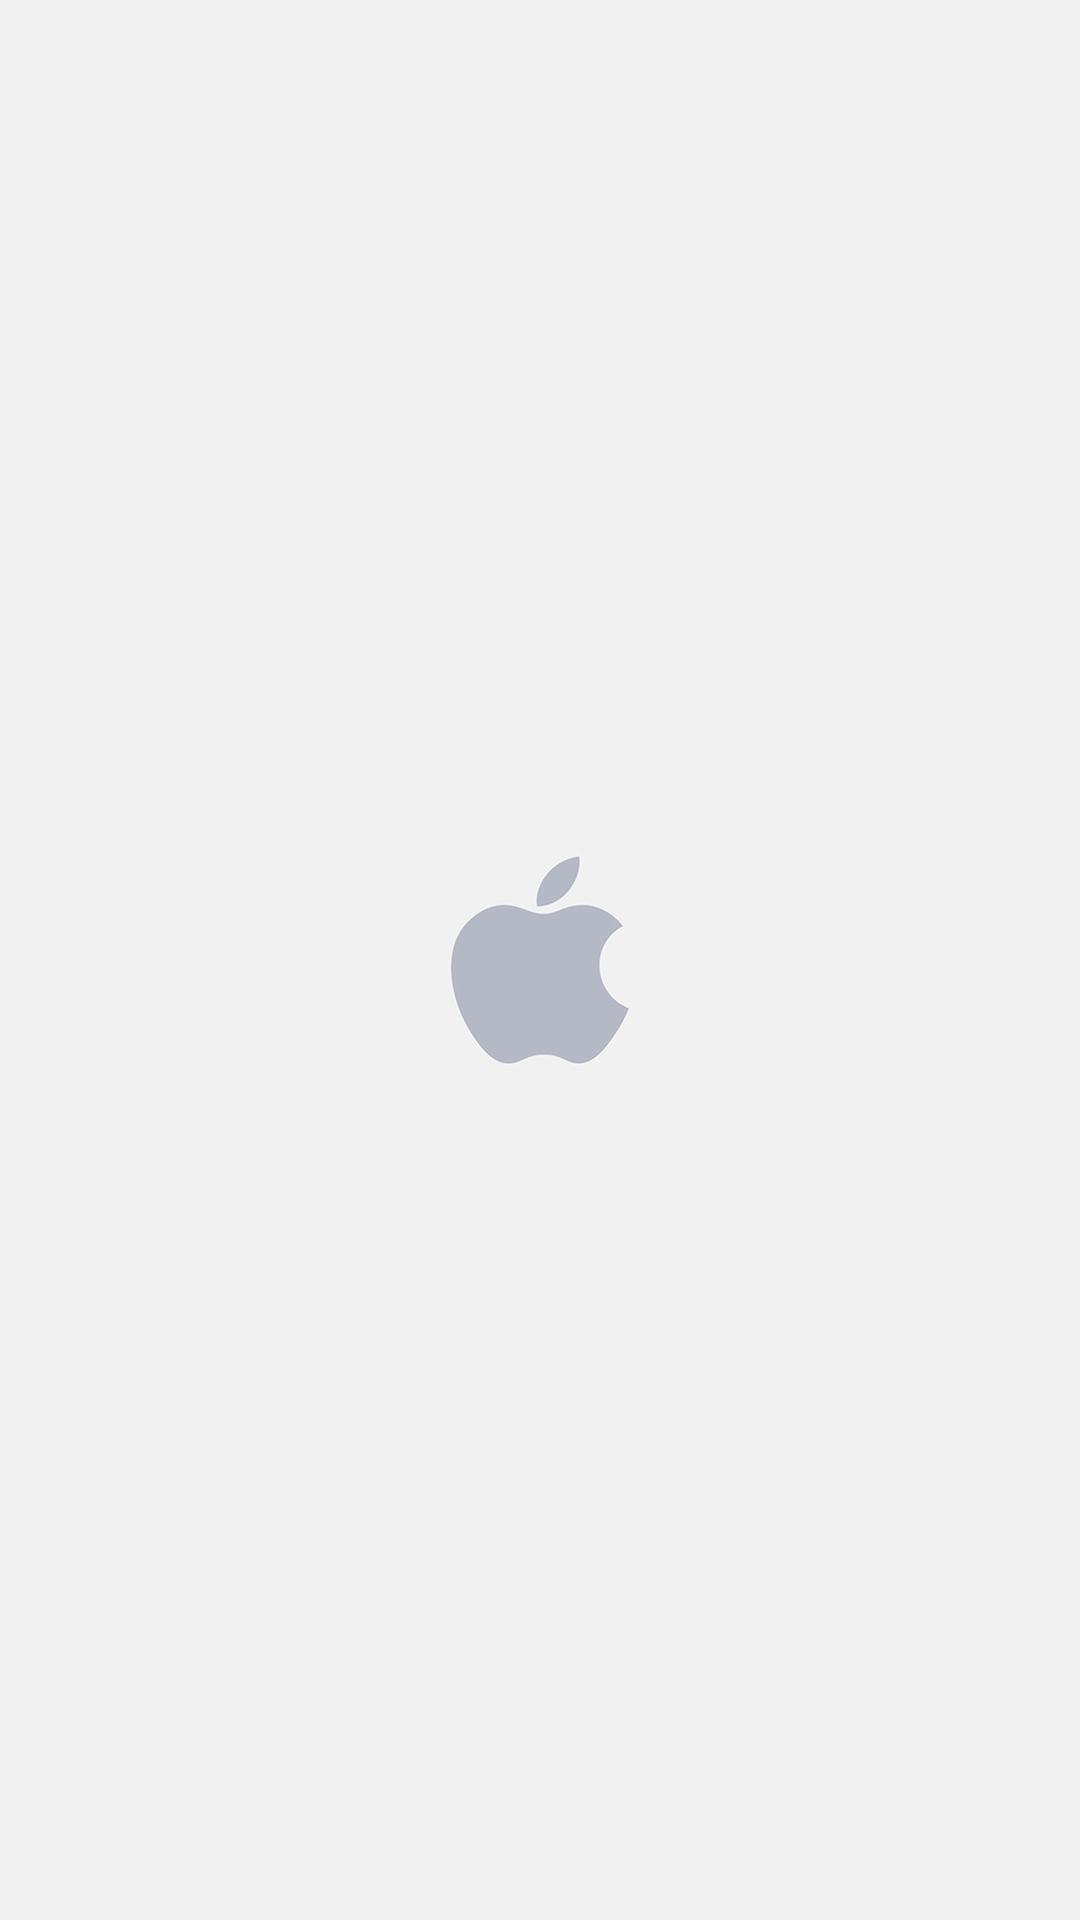 Apple Logo White Art Illustration iPhone 8 Wallpaper Free